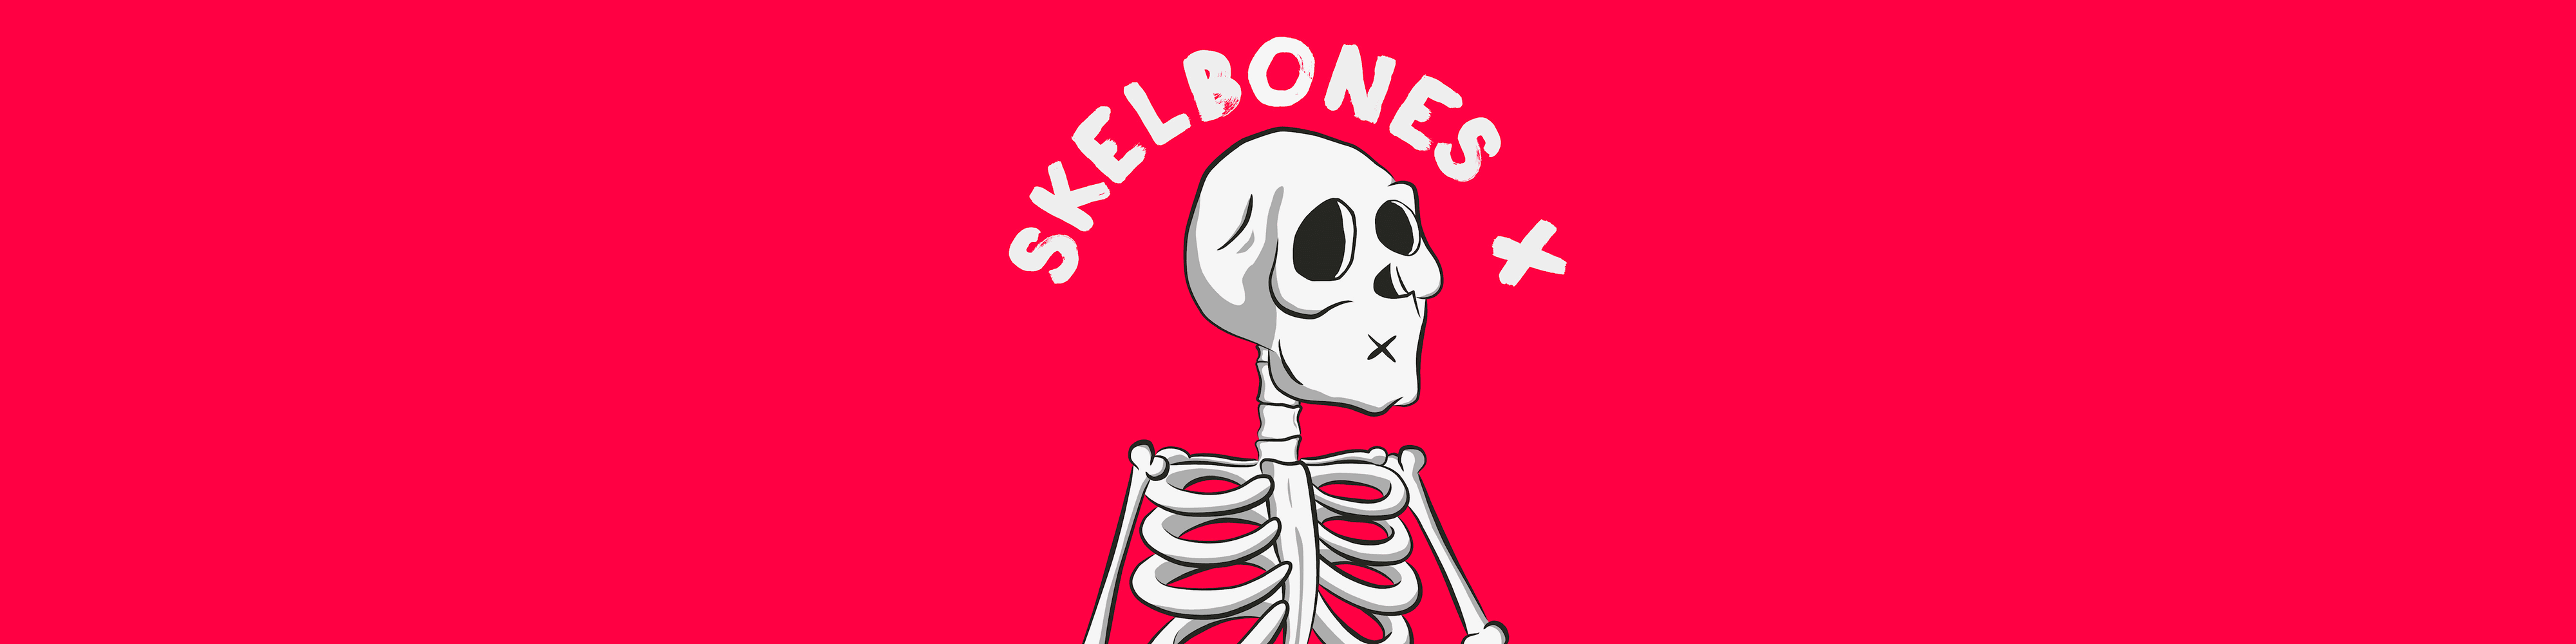 Skelbones banner